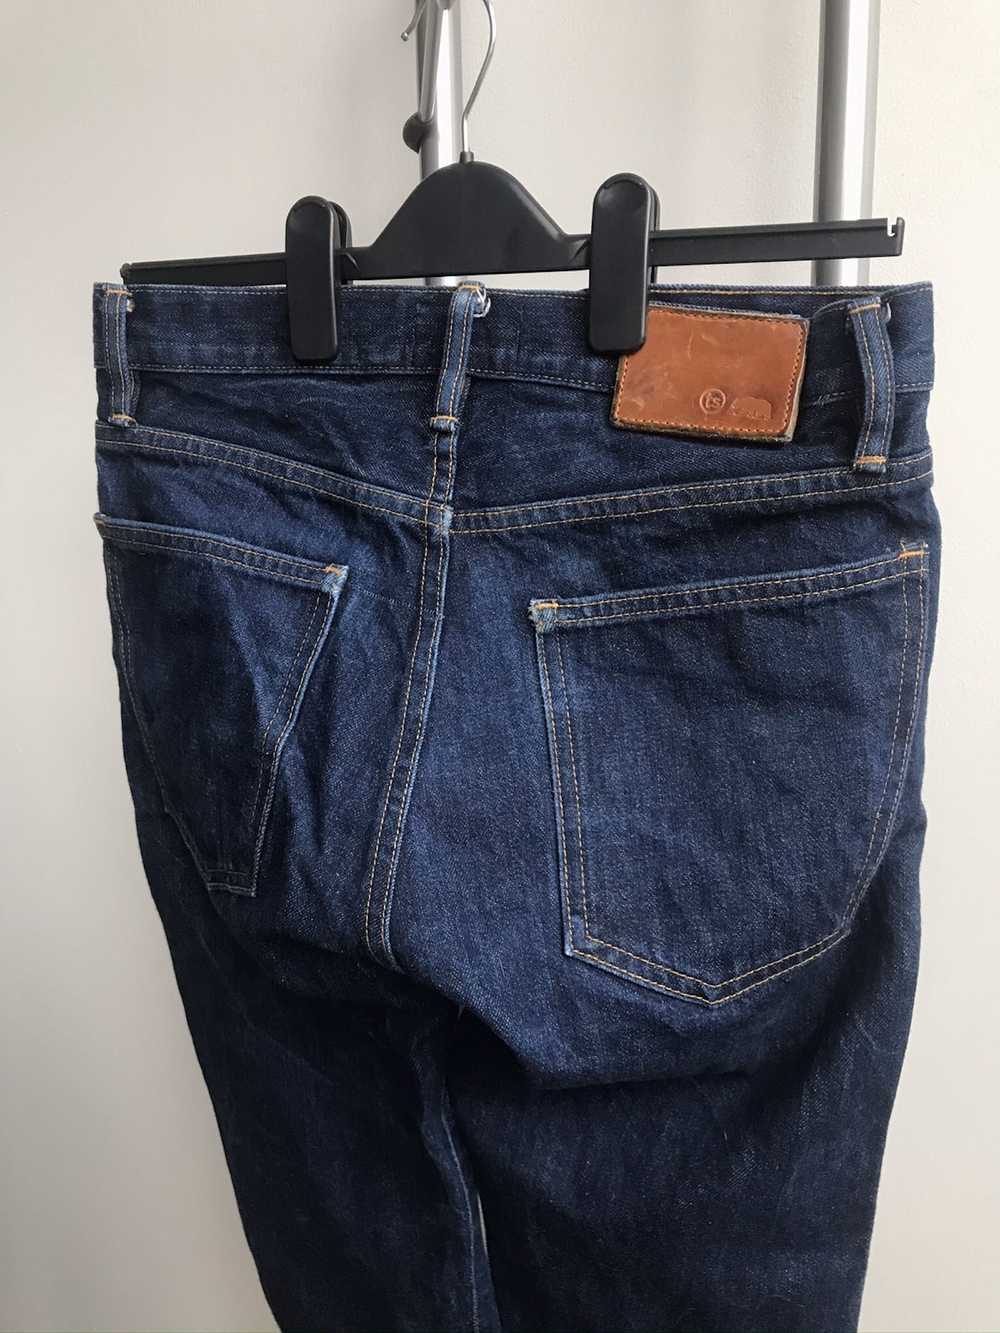 Taylor Stitch Selvedge Denim Jeans 30x32 - image 8